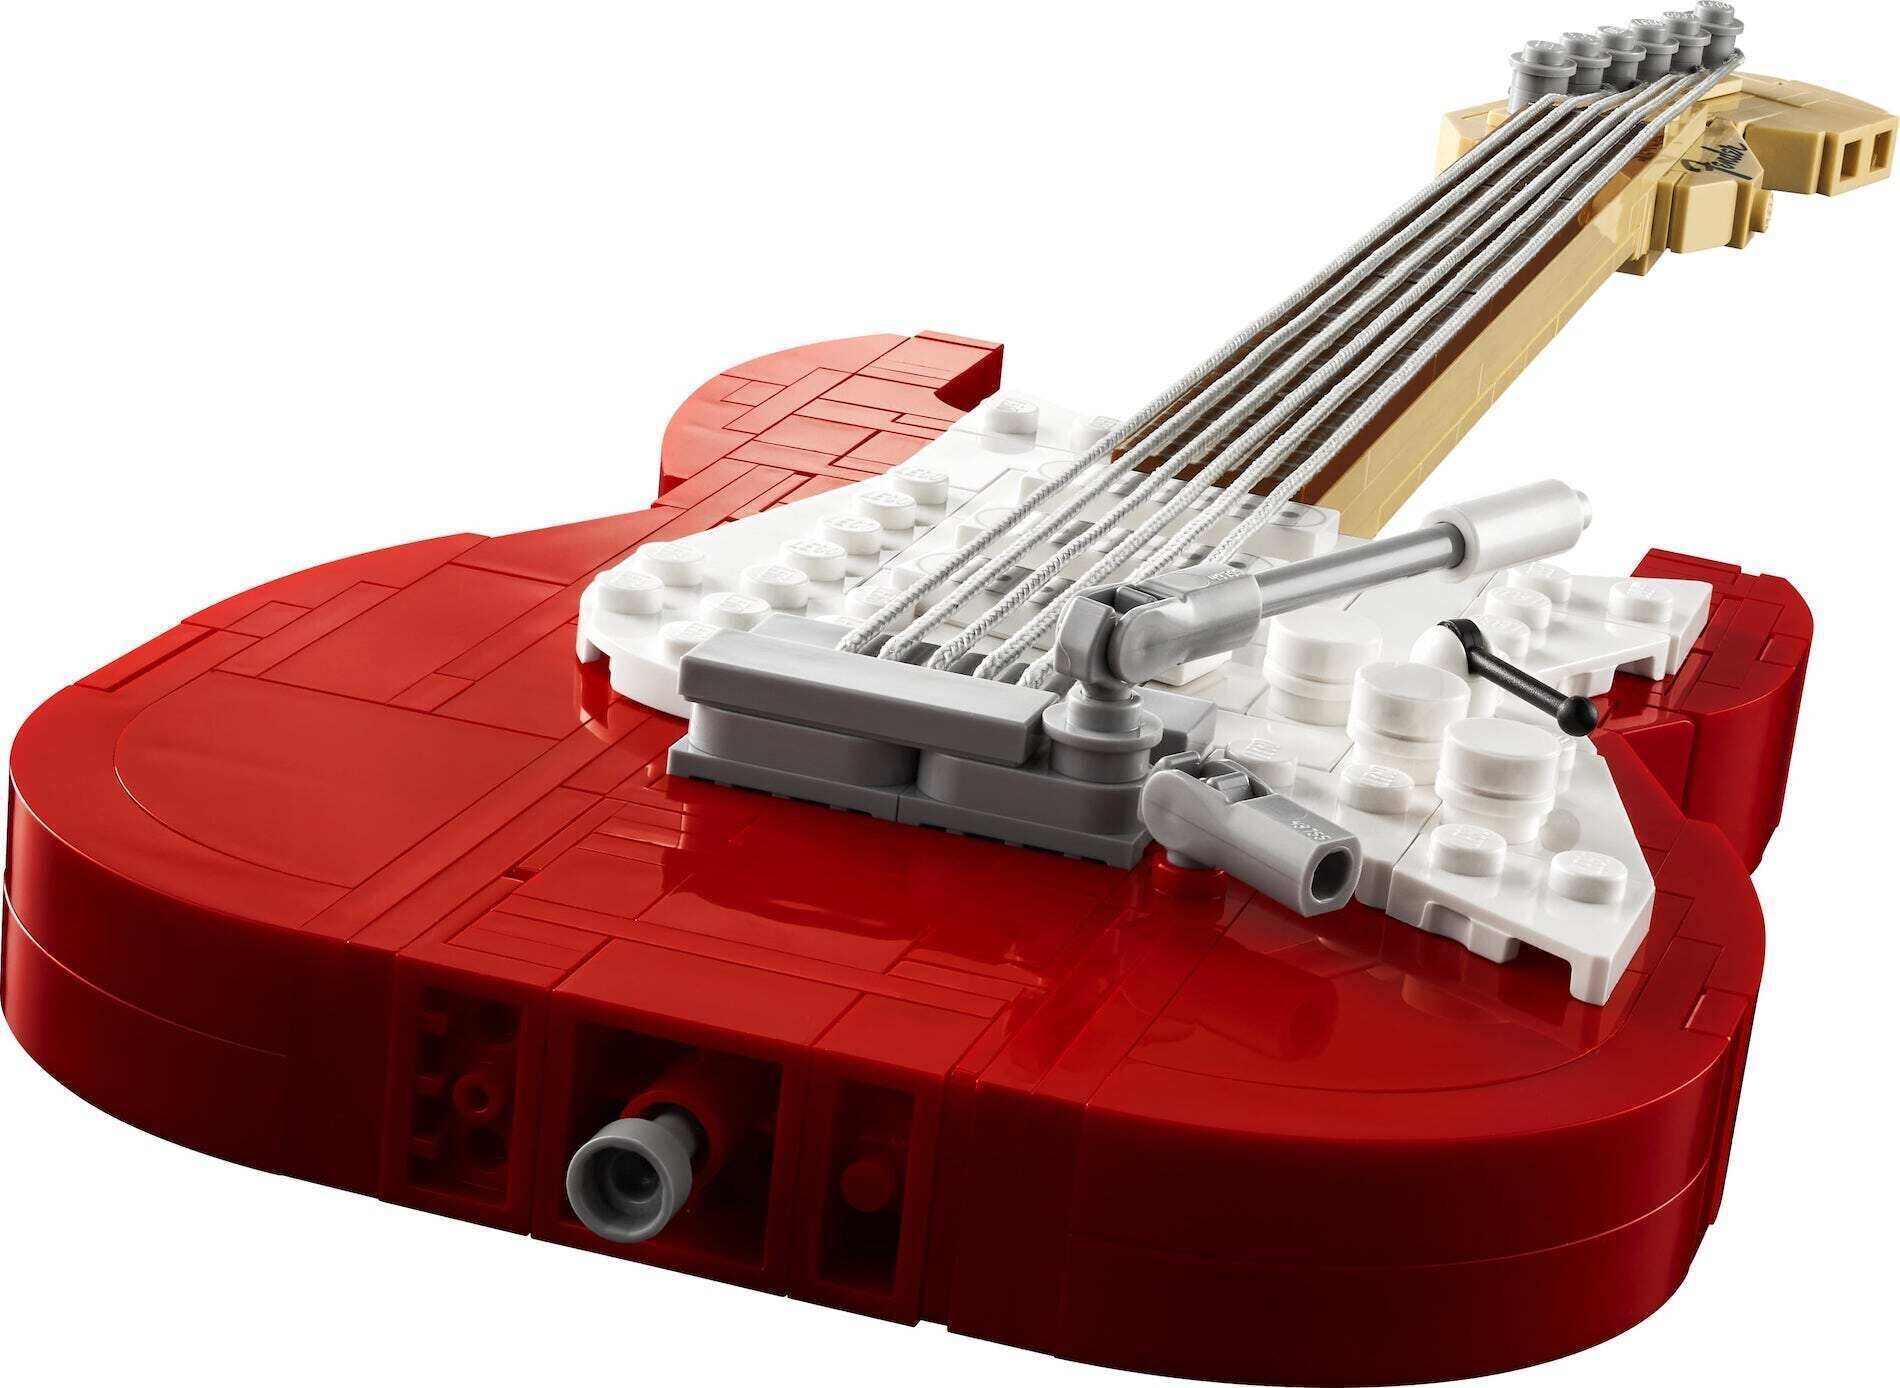 Фигурка Lego из серии Ideas в виде электрогитары Fender Stratocaster